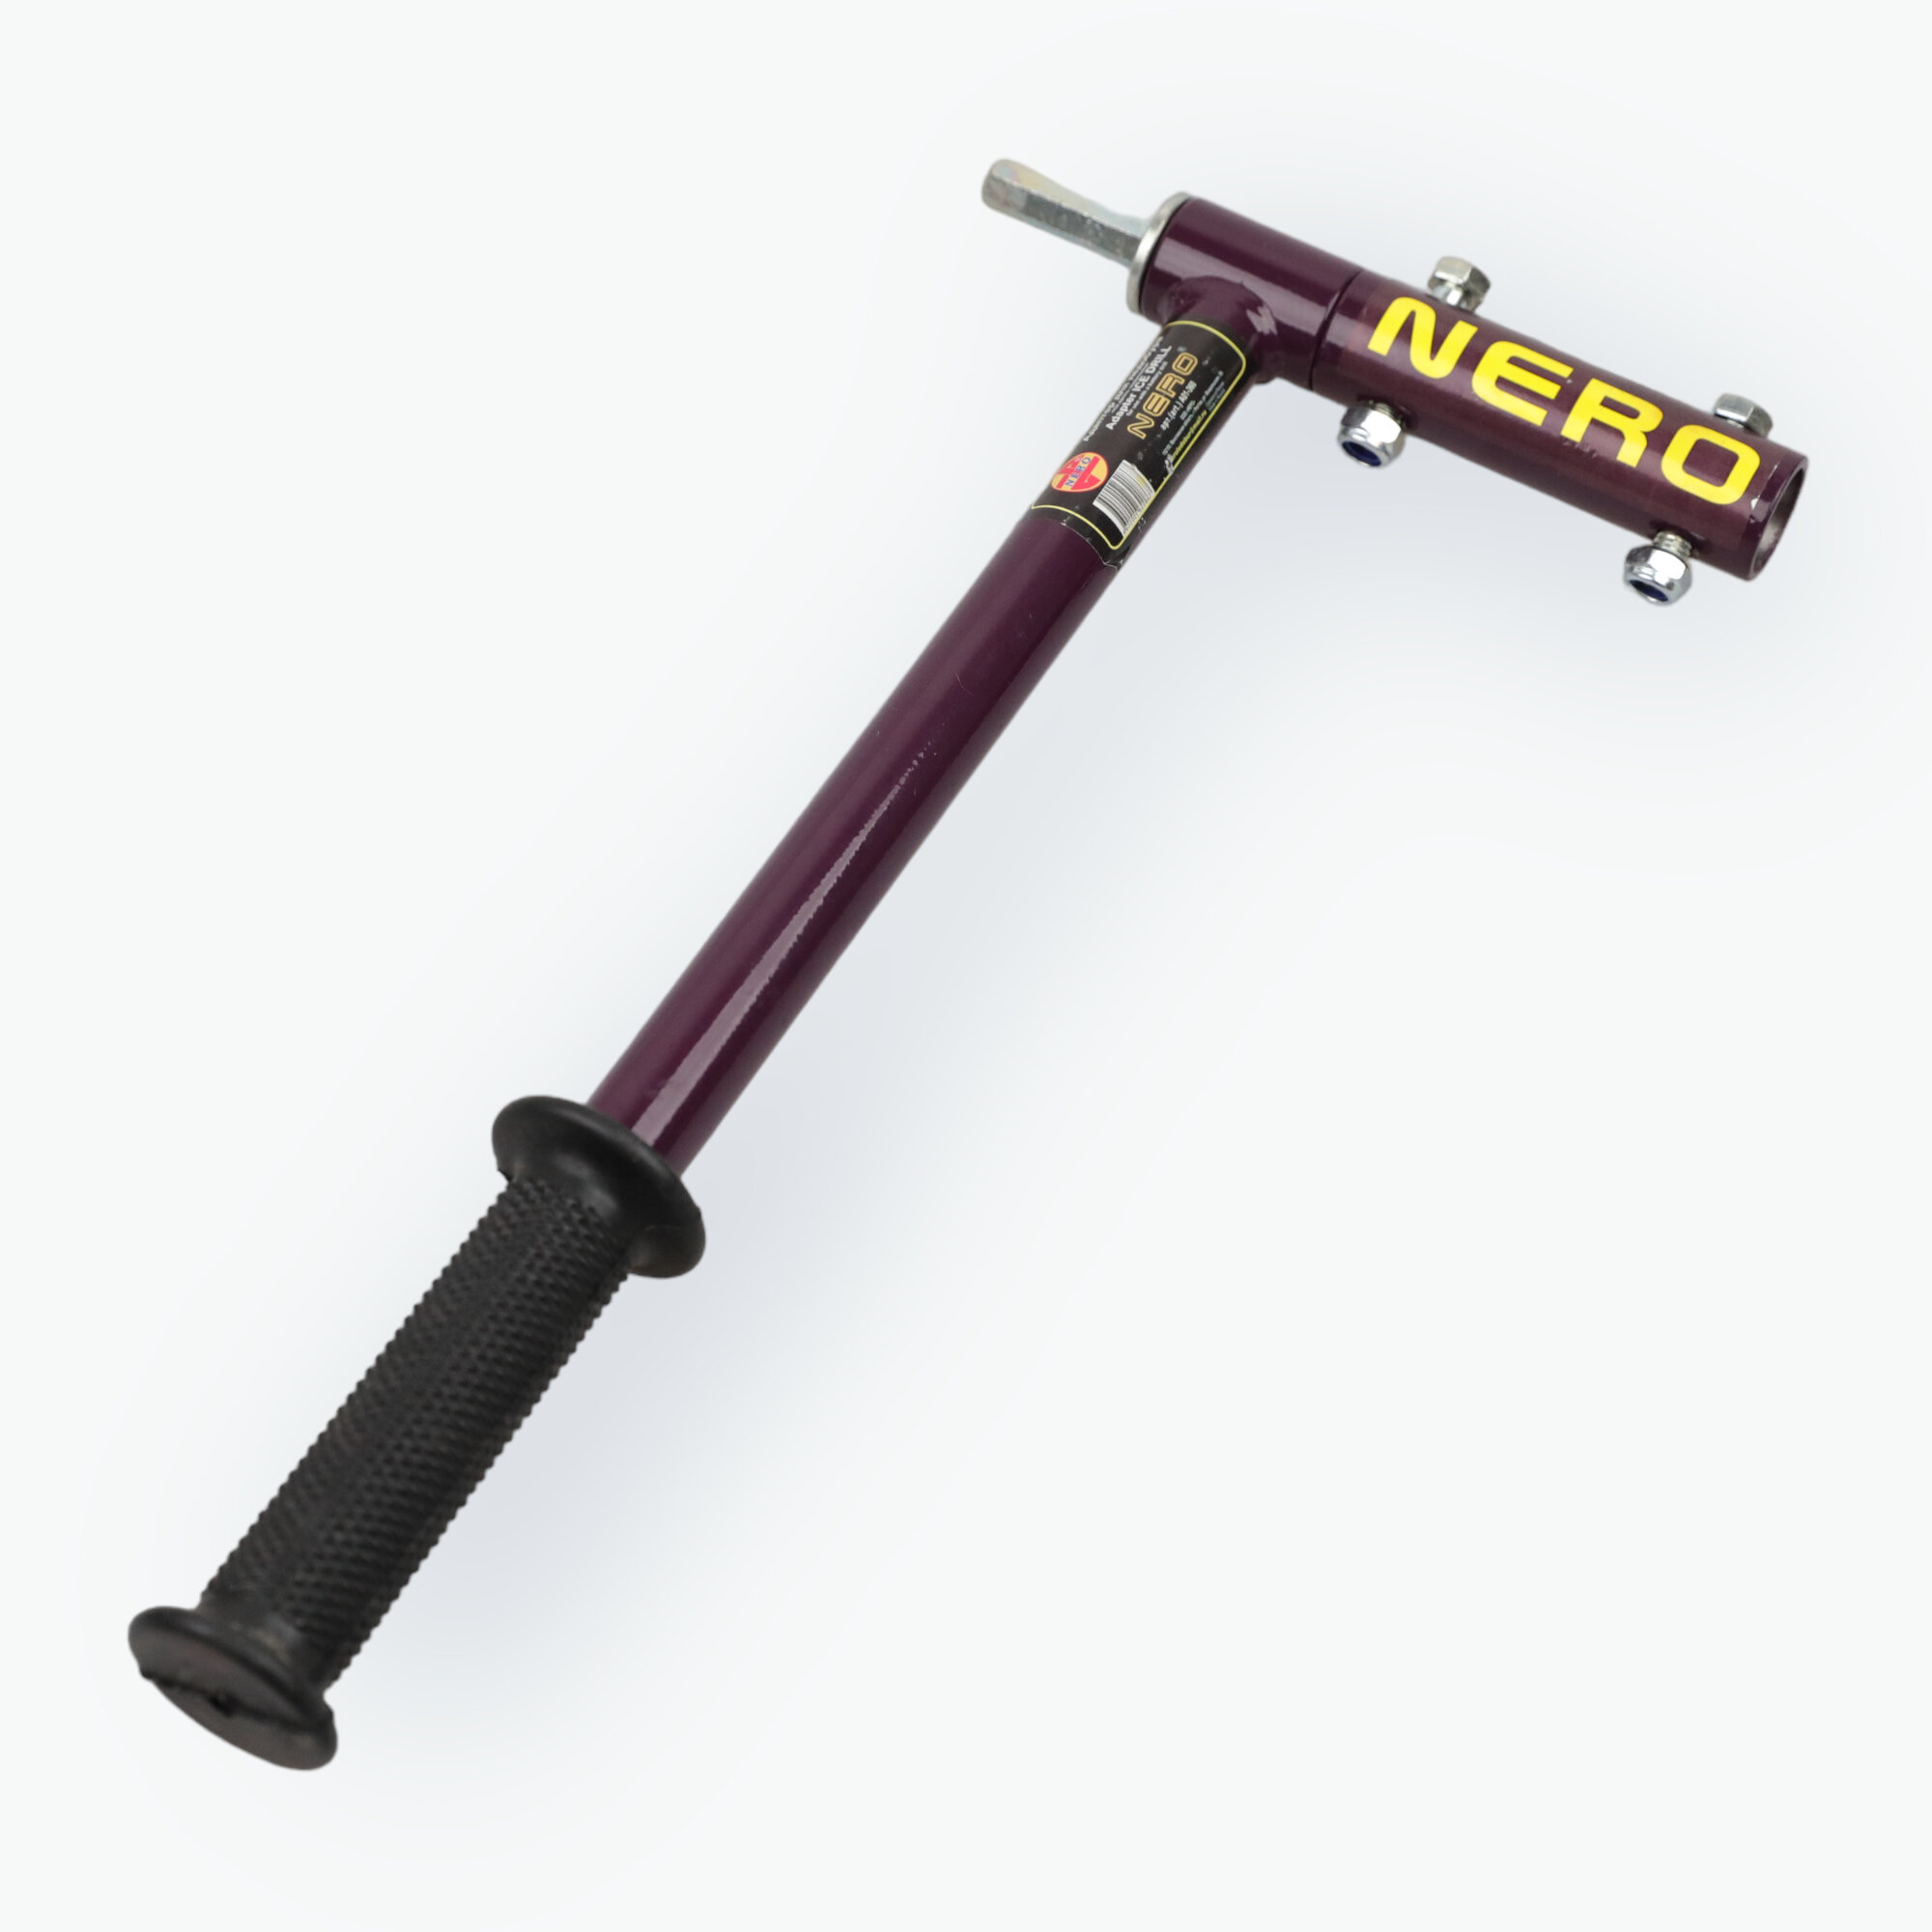 Адаптер Nero Стандарт под дрель (шуруповерт) с ручкой 360мм A01-360 - Бордовый